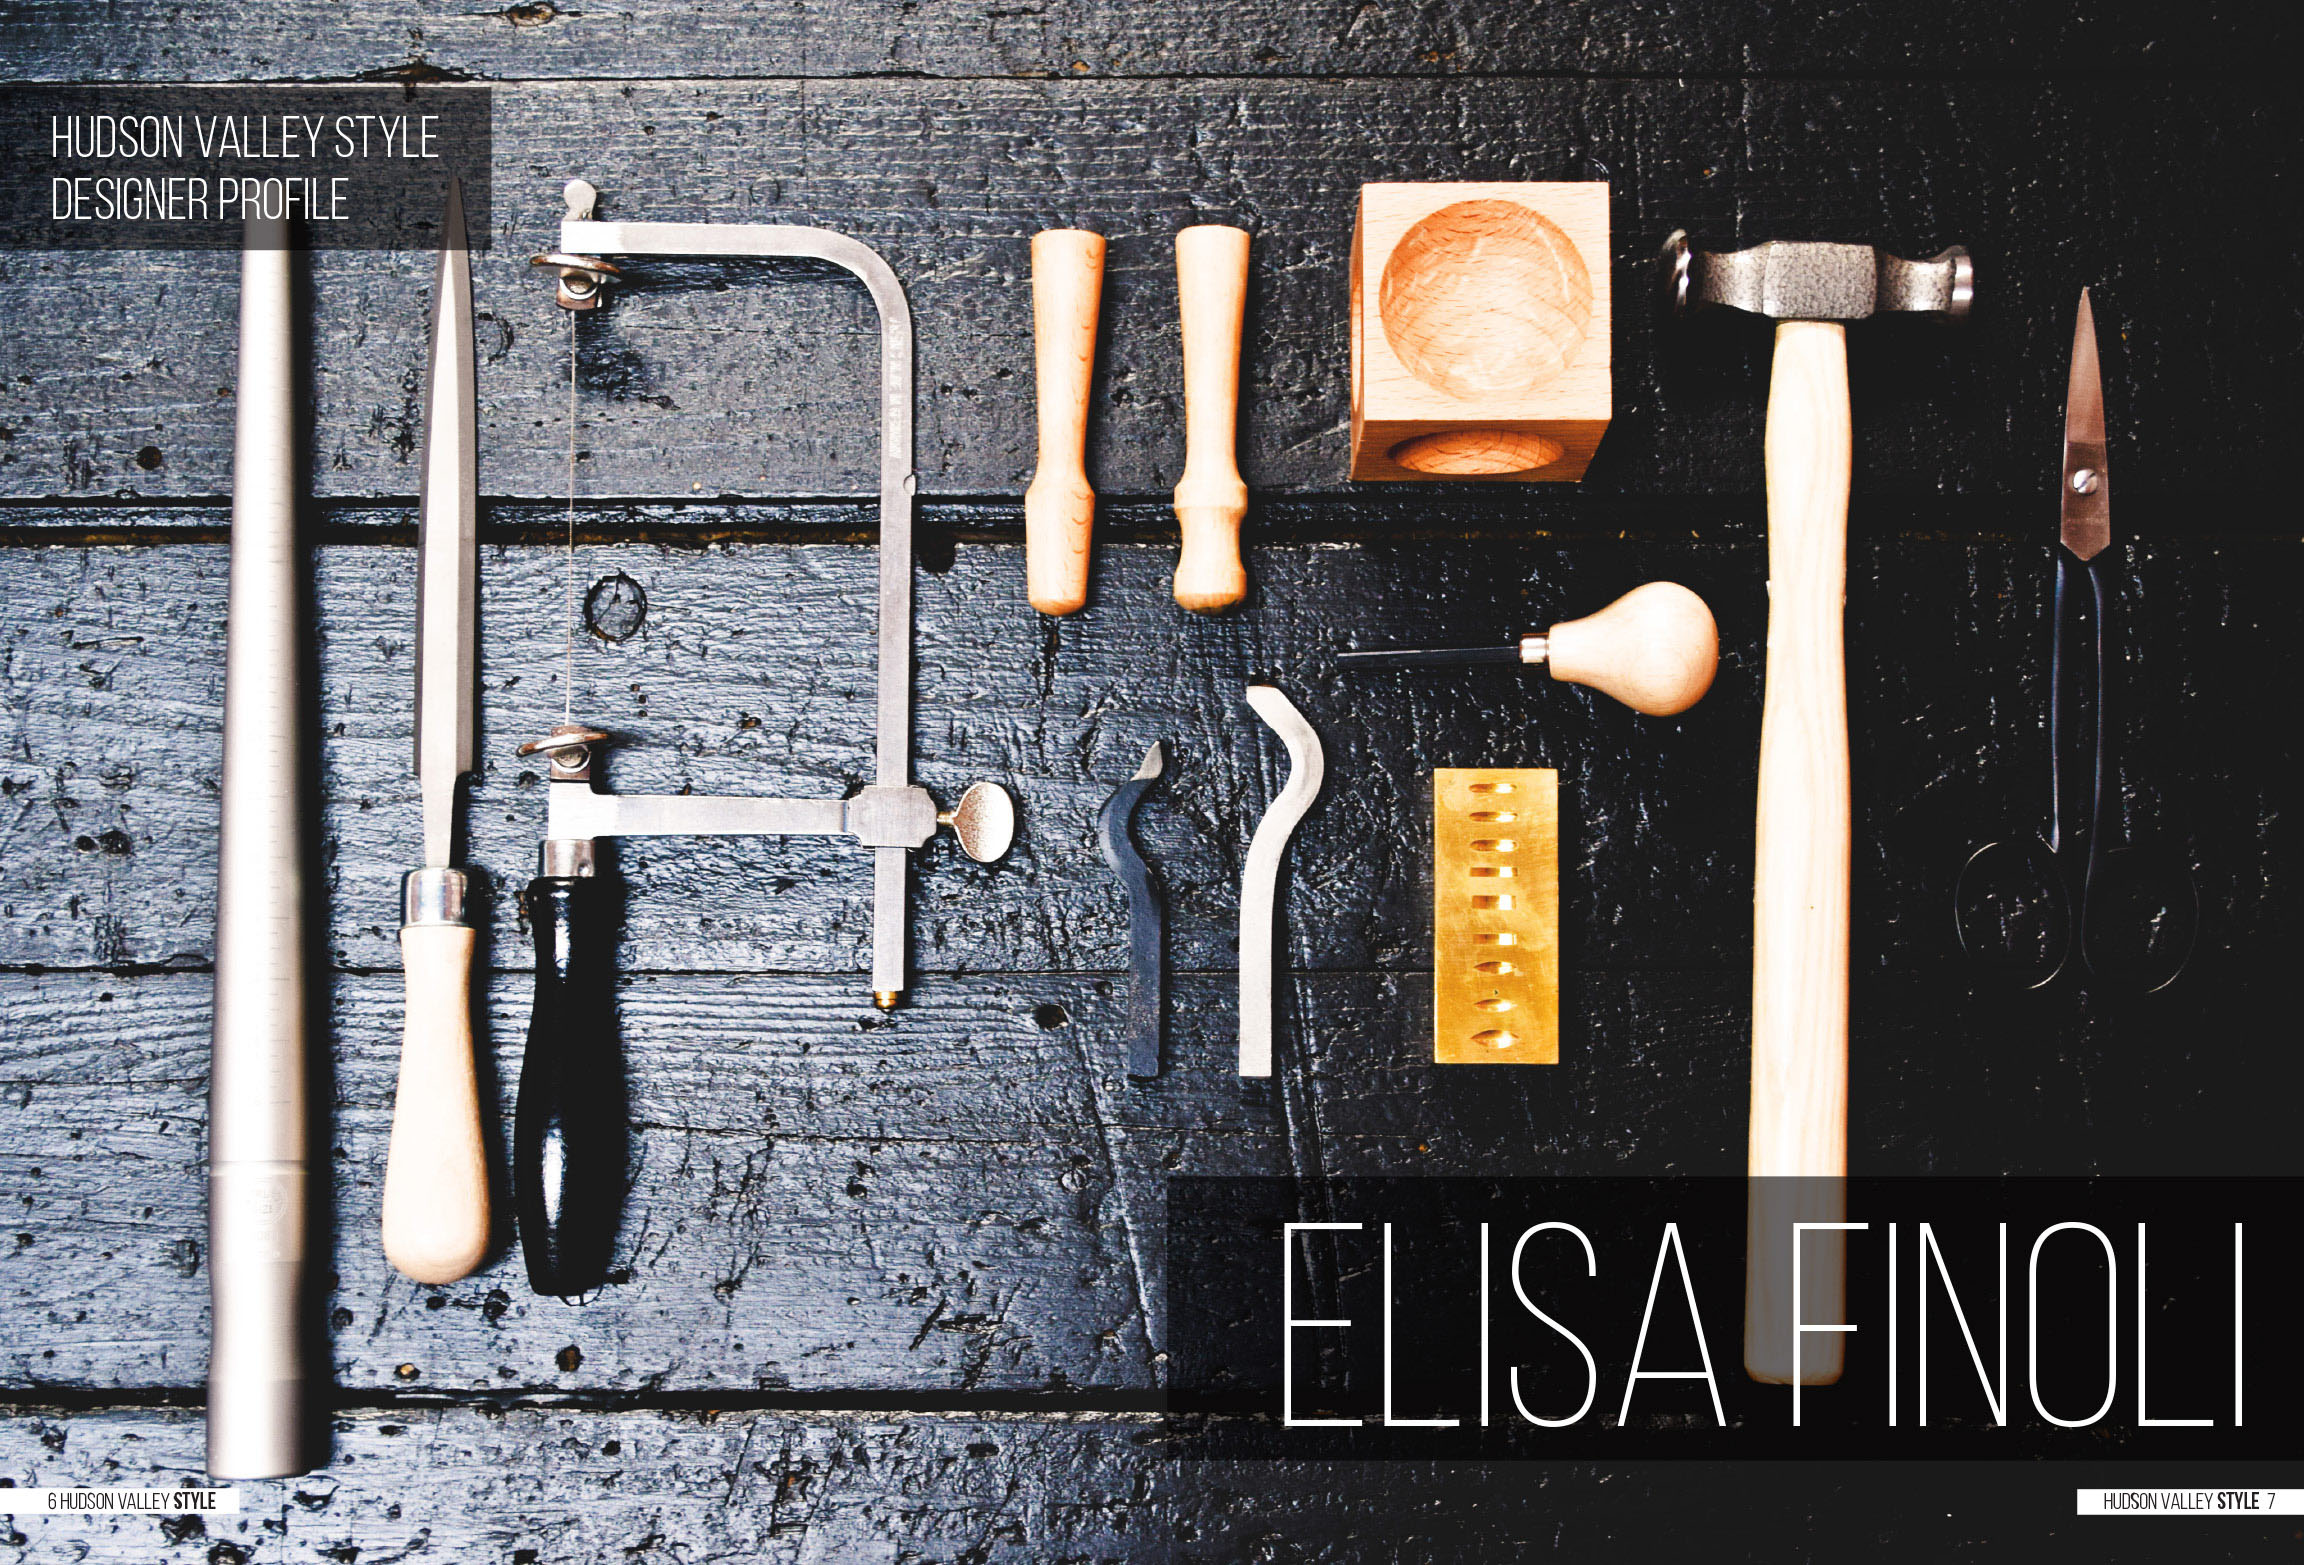 Hudson Valley Style Design Profile: Elisa Finoli (Aglaia Jewelry)